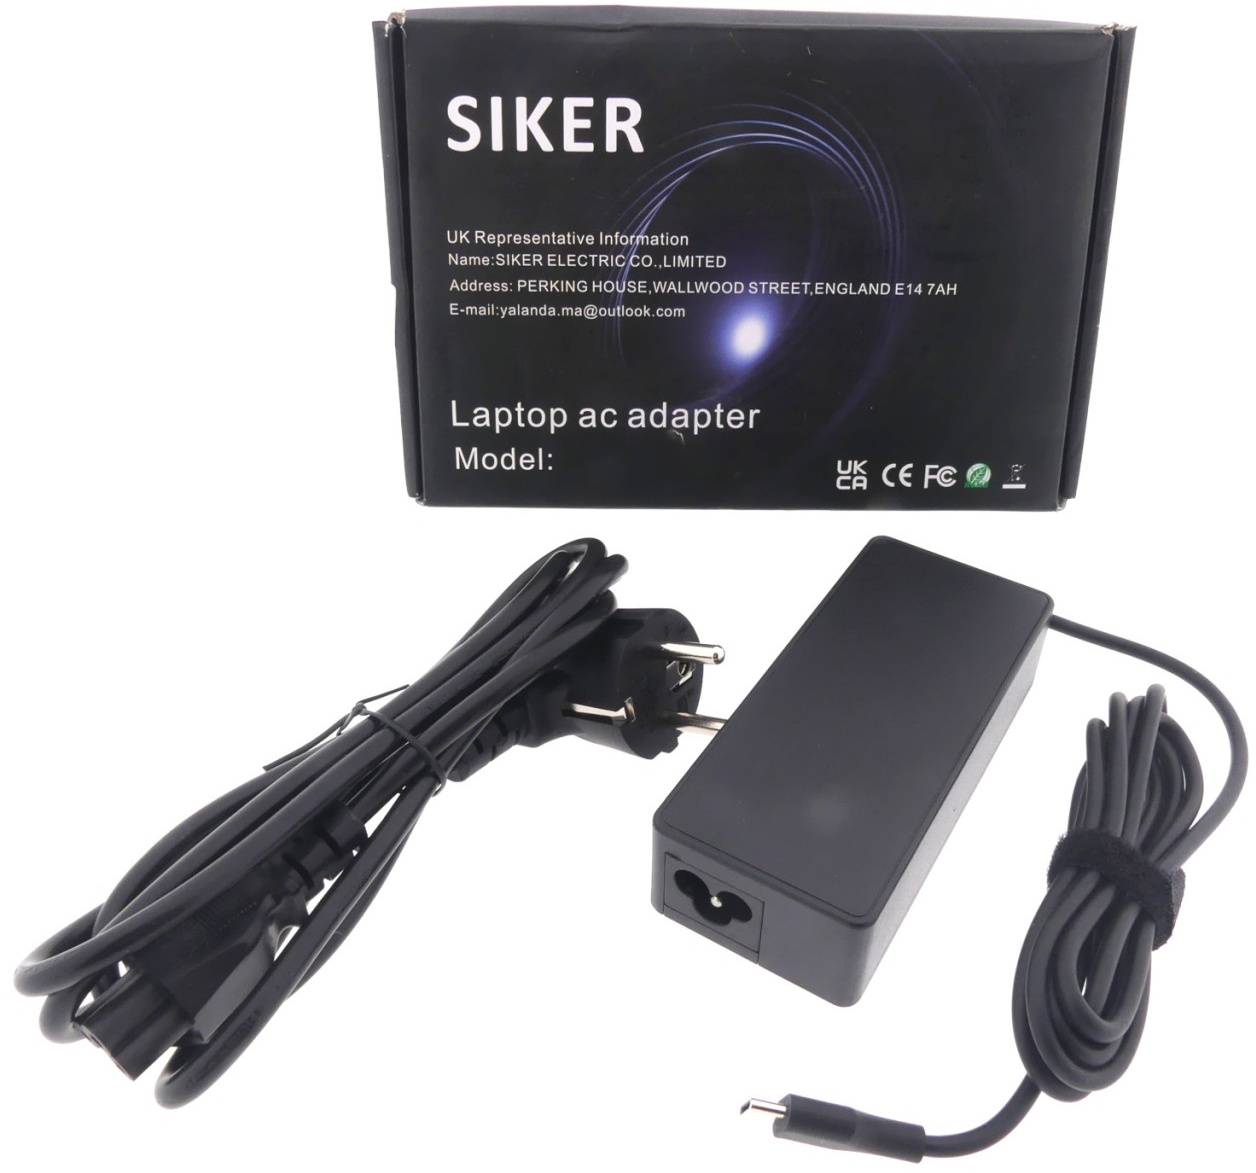 SIKER Laptop AC Adapter angepasstes Ladegerät Aufladegerät USB-C SK902000325